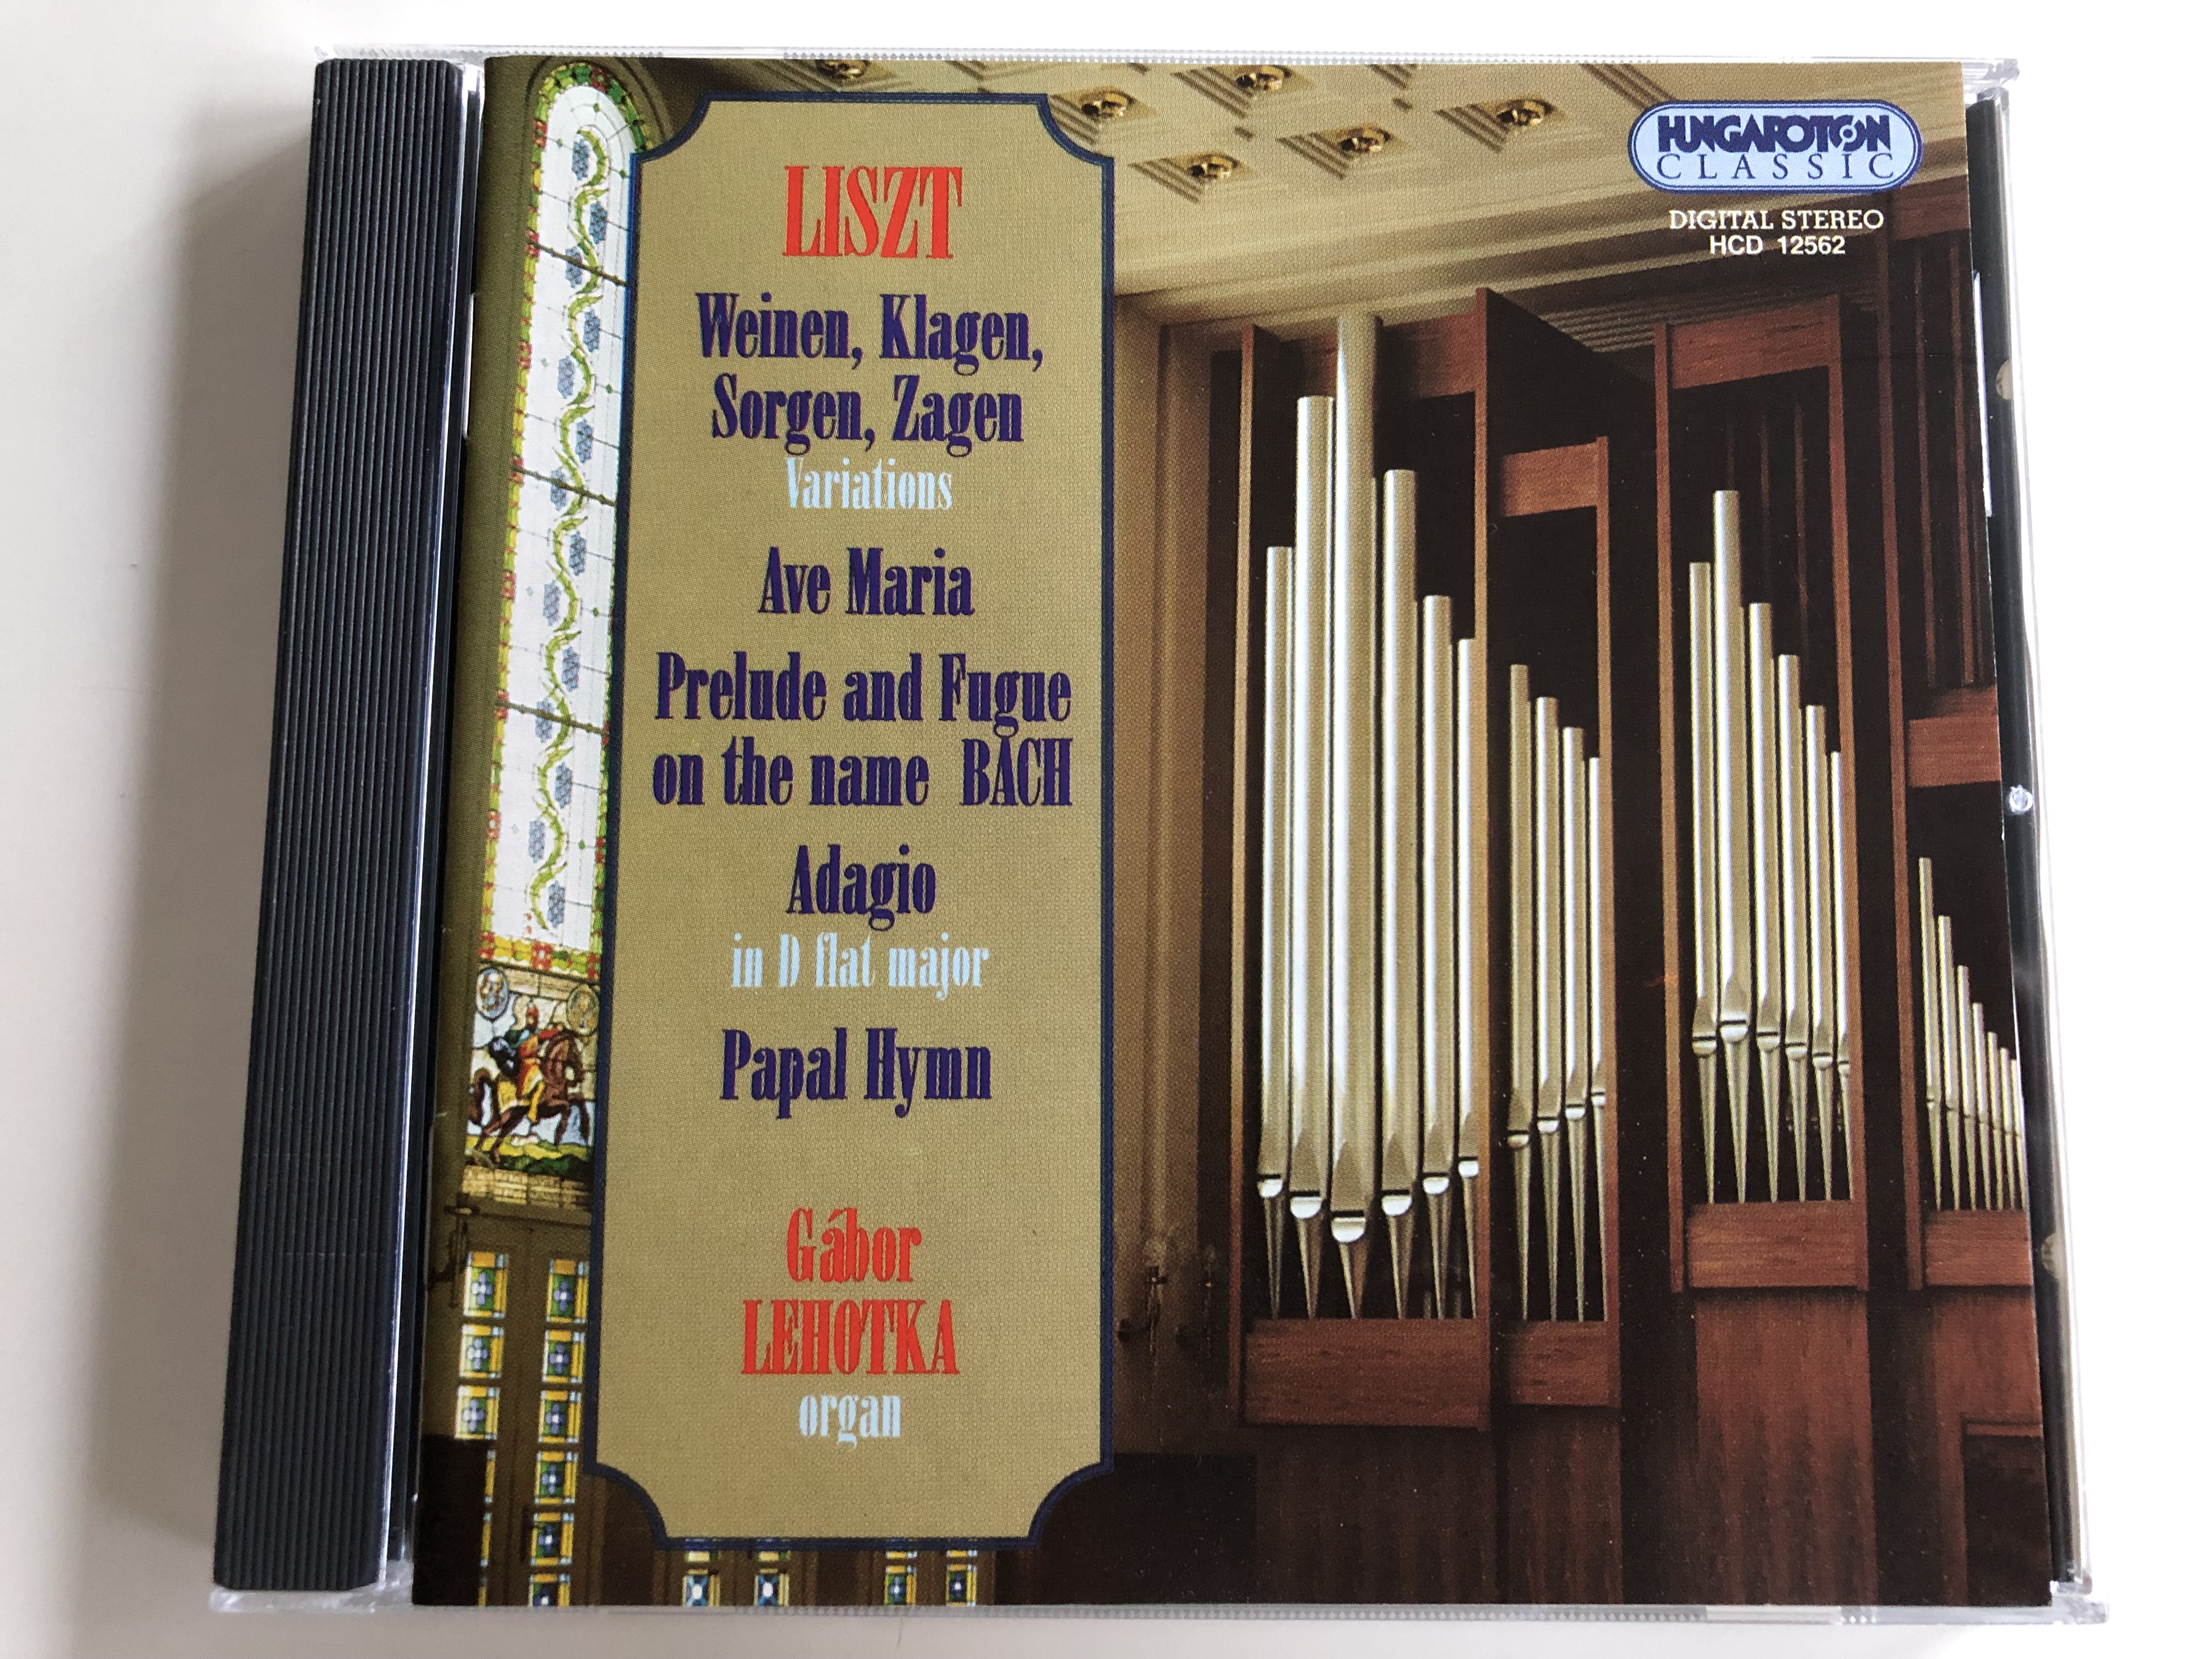 -liszt-weinen-klagen-sorgen-zagen-variations-ave-maria-prelude-and-fugue-on-the-name-bach-g-bor-lehotka-organ-hungaroton-classic-audio-cd-1994-hcd-12562-1-.jpg